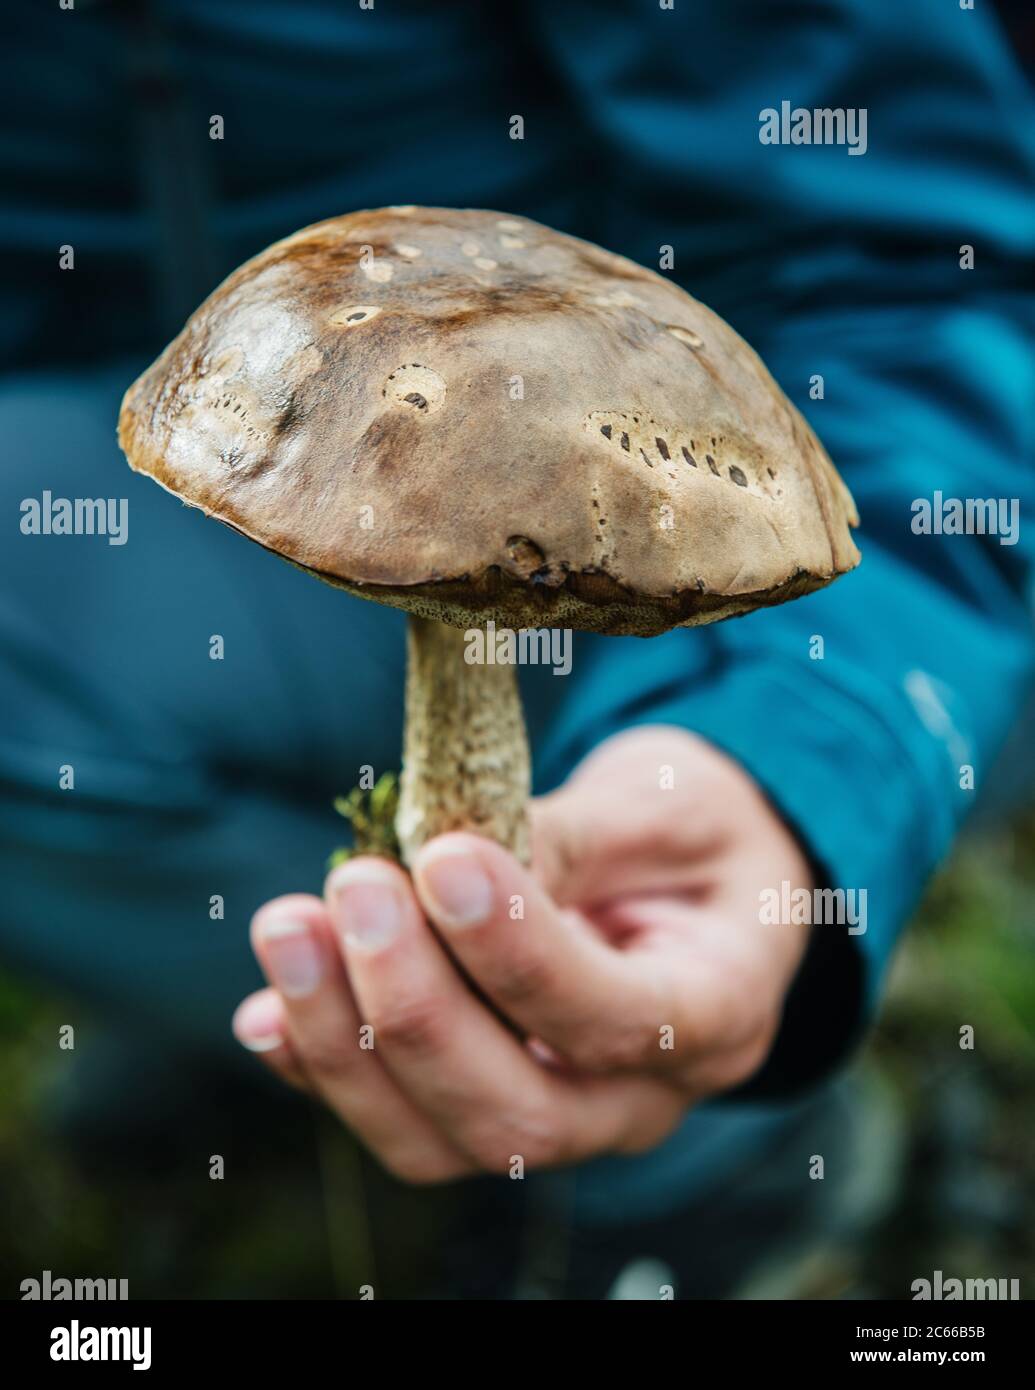 hand holding a wild mushroom Southern Iceland, Iceland, Scandinavia, Europe Stock Photo